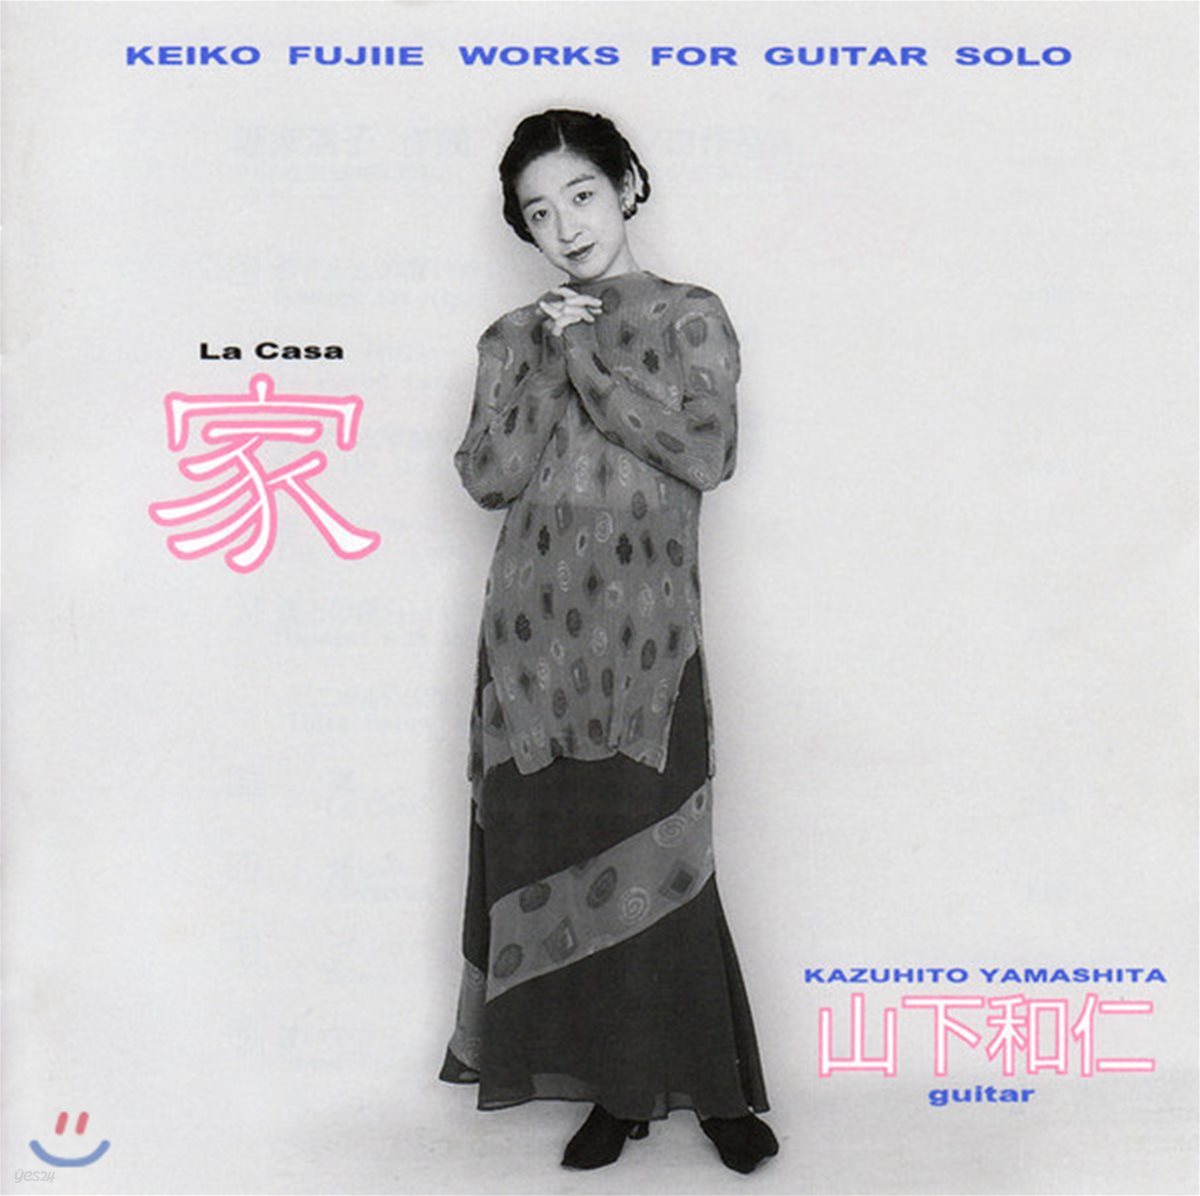 Kazuhito Yamashita 케이코 후지에: 기타 솔로를 위한 작품집 (Keiko Fujiie: La Casa - Works For Guitar Solo)